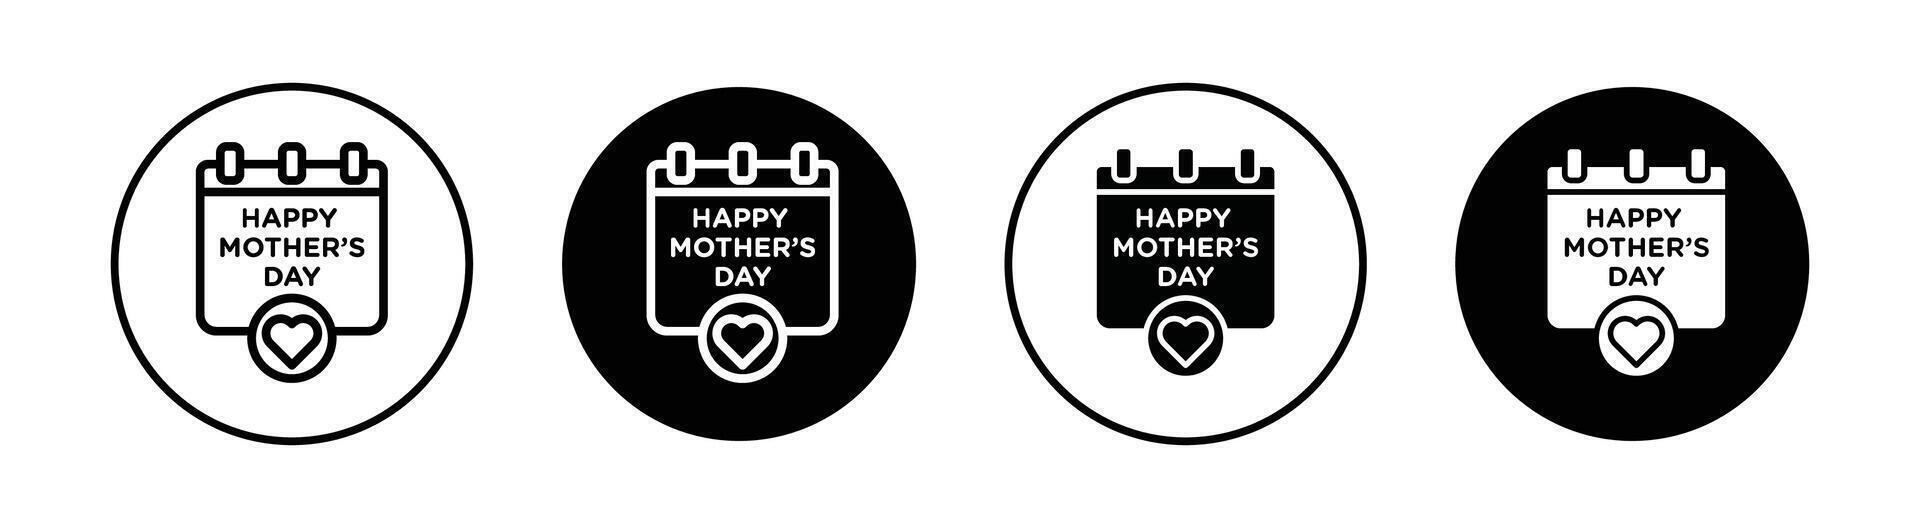 Mothers day calendar icon vector